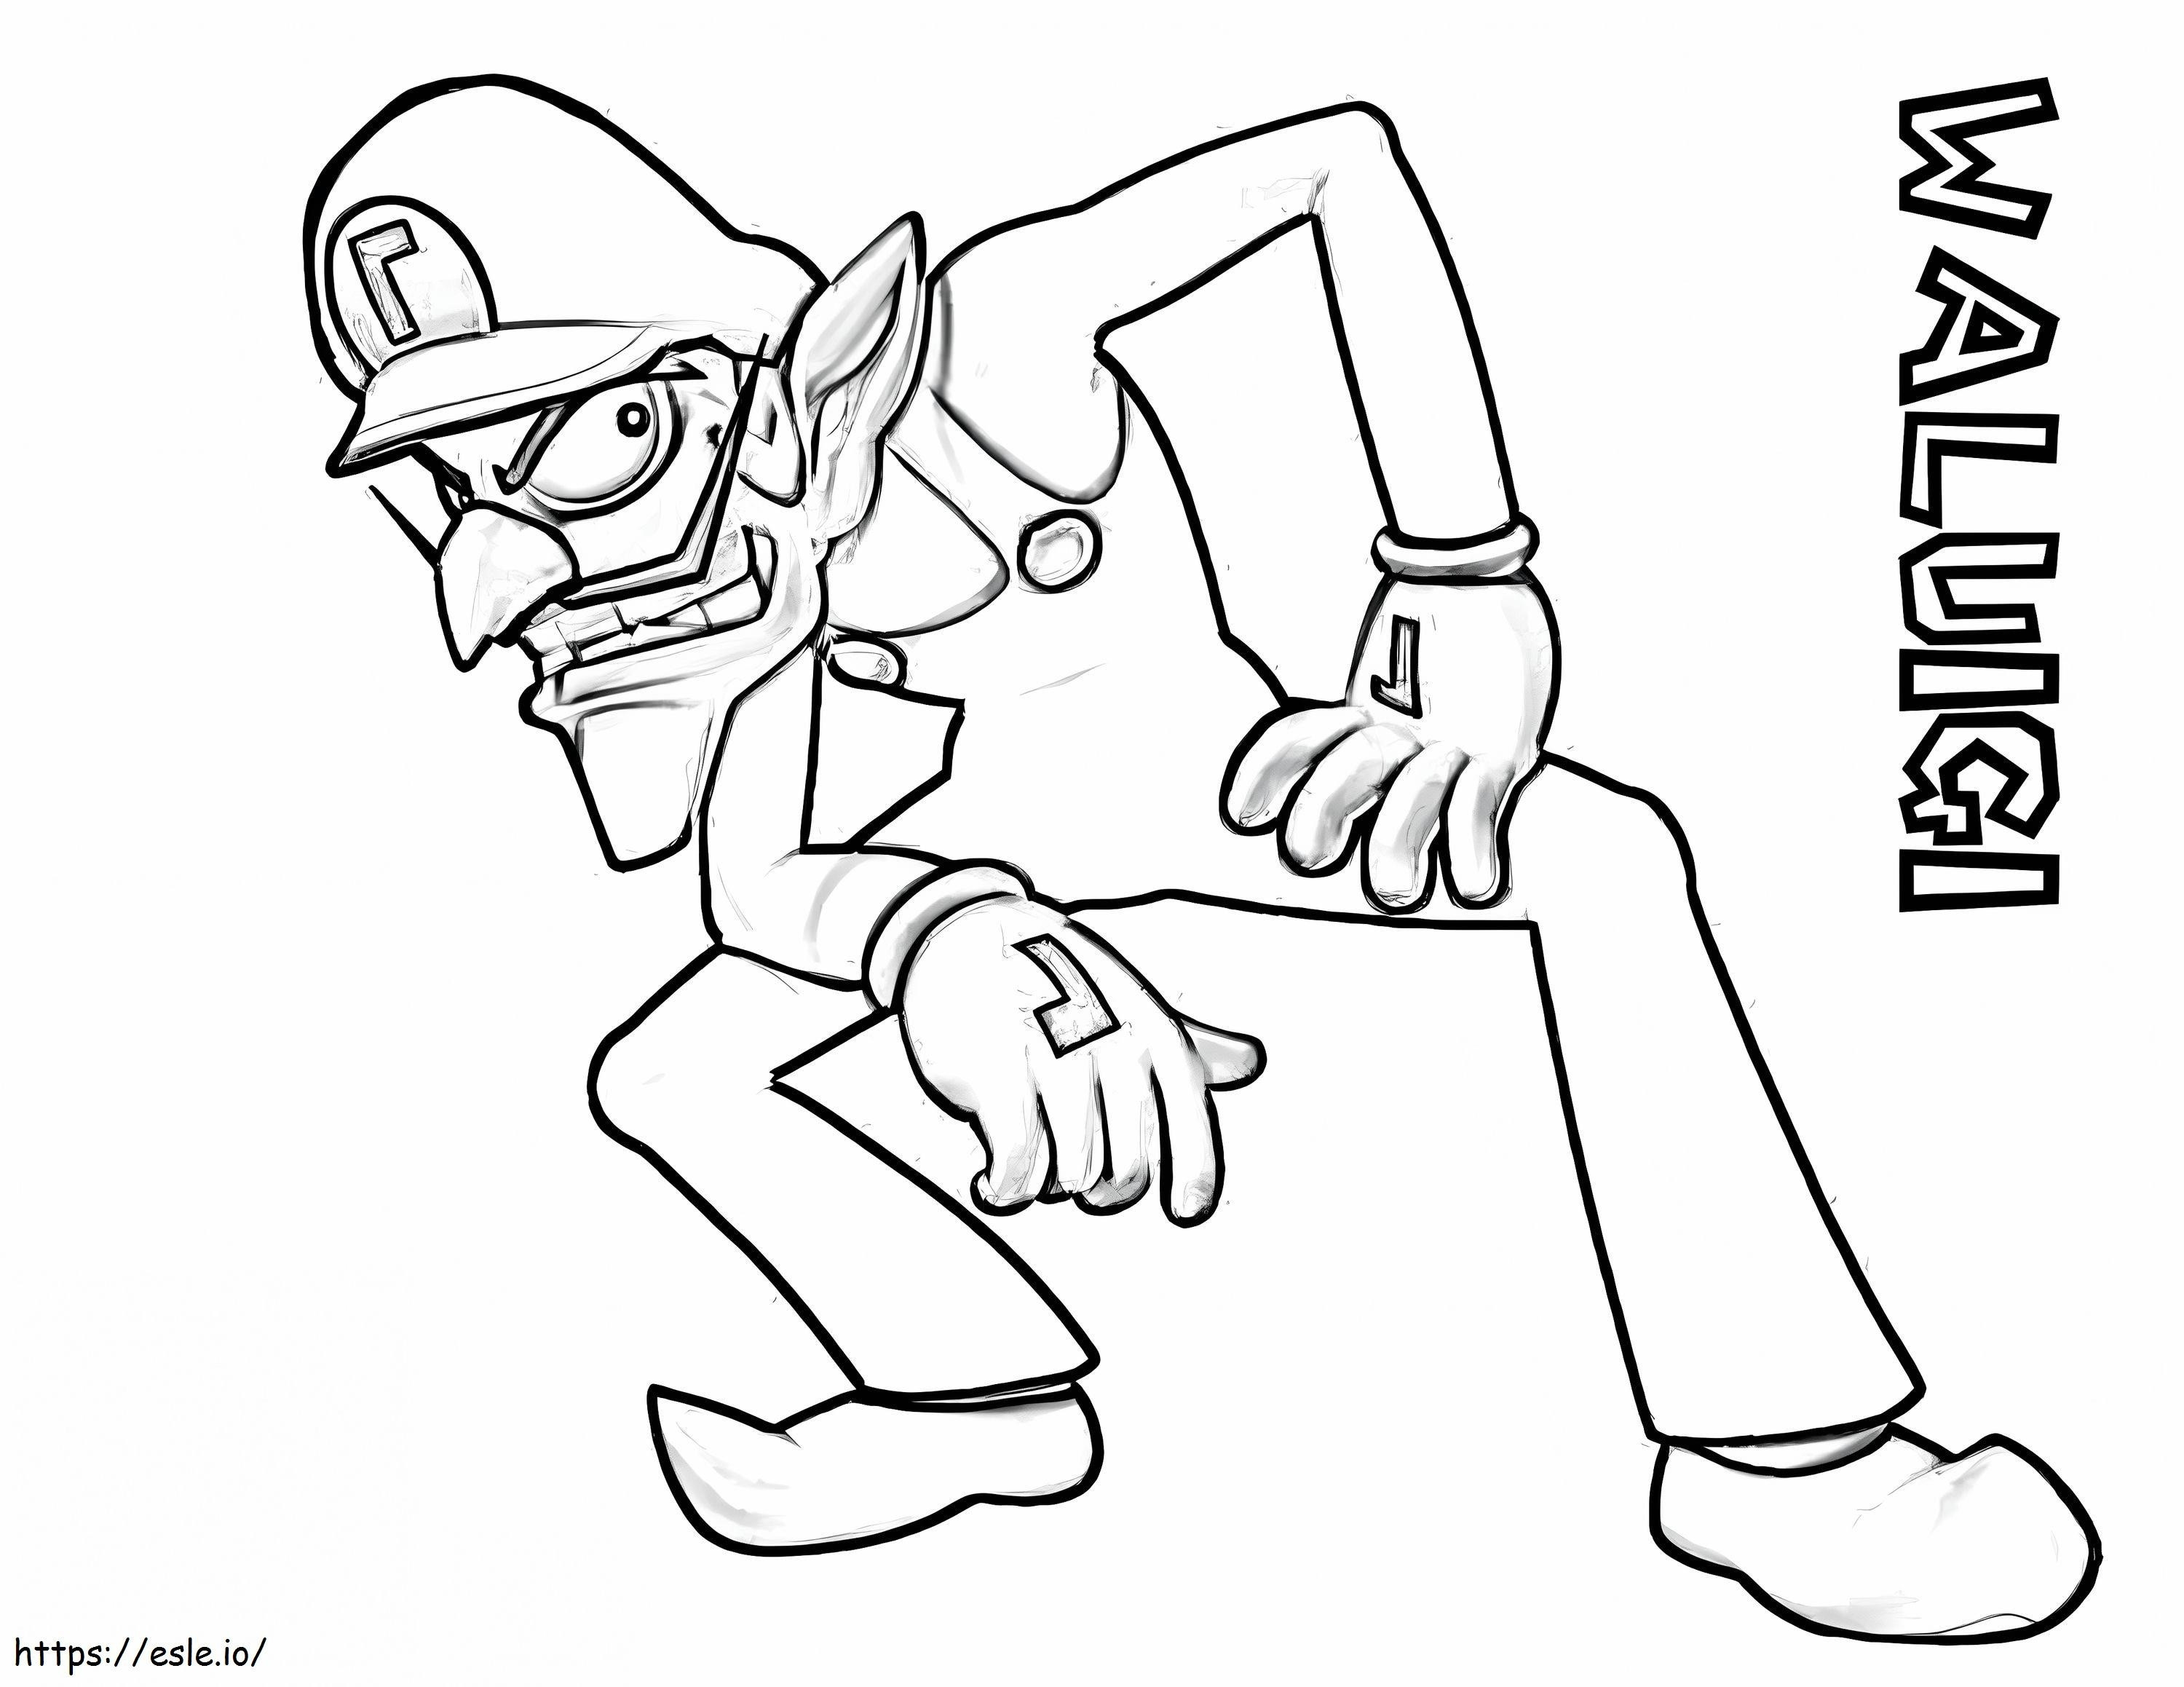 Waluigi From Super Mario 1 coloring page